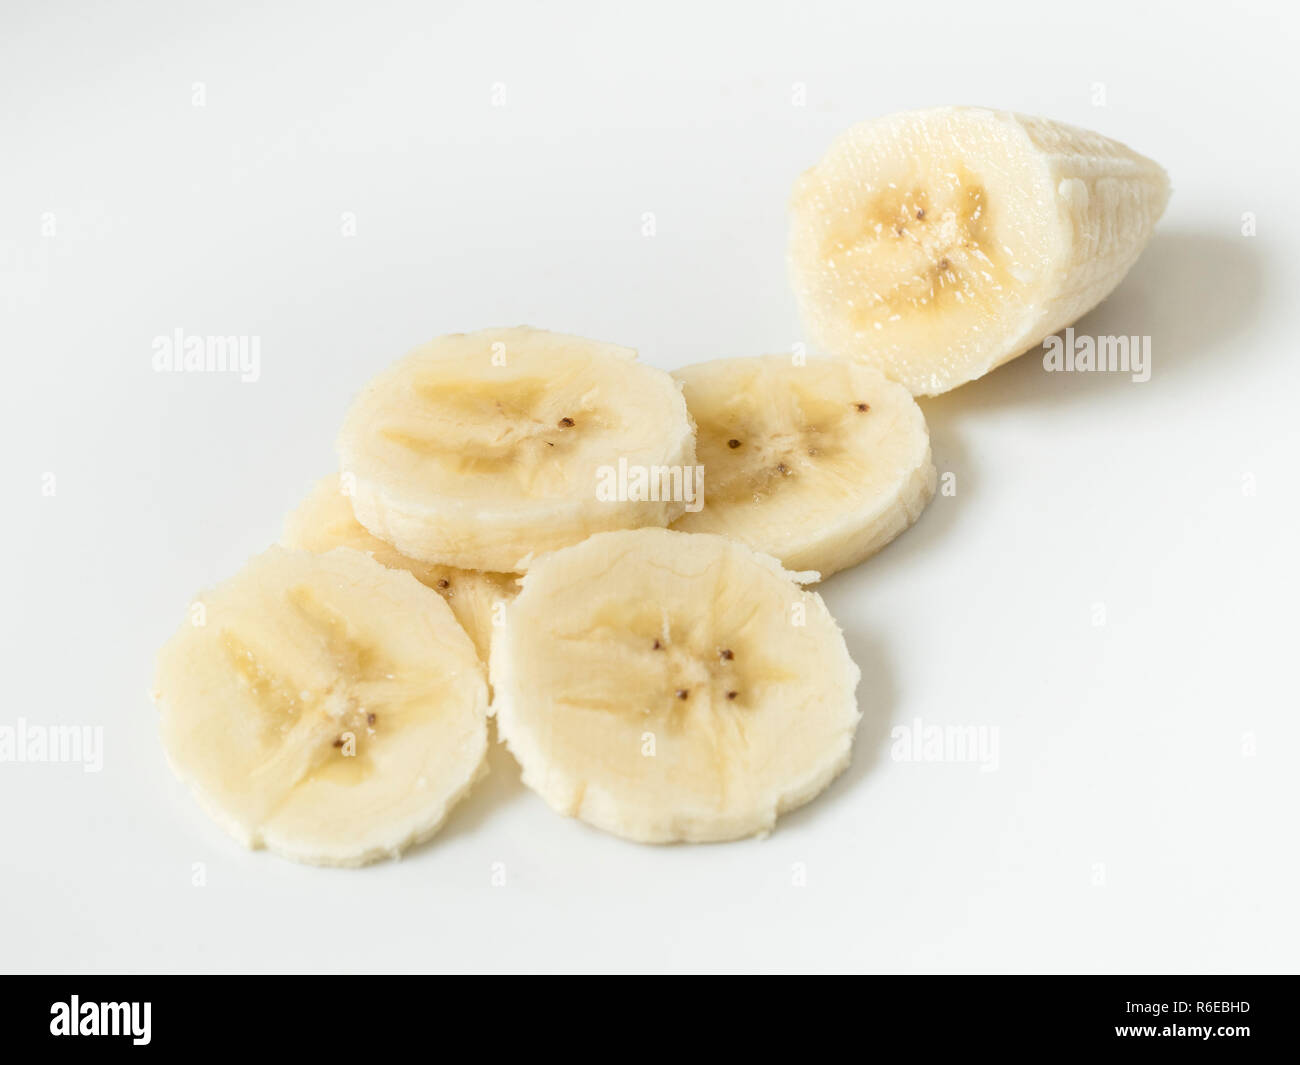 https://c8.alamy.com/comp/R6EBHD/slices-of-banana-on-a-white-plate-R6EBHD.jpg